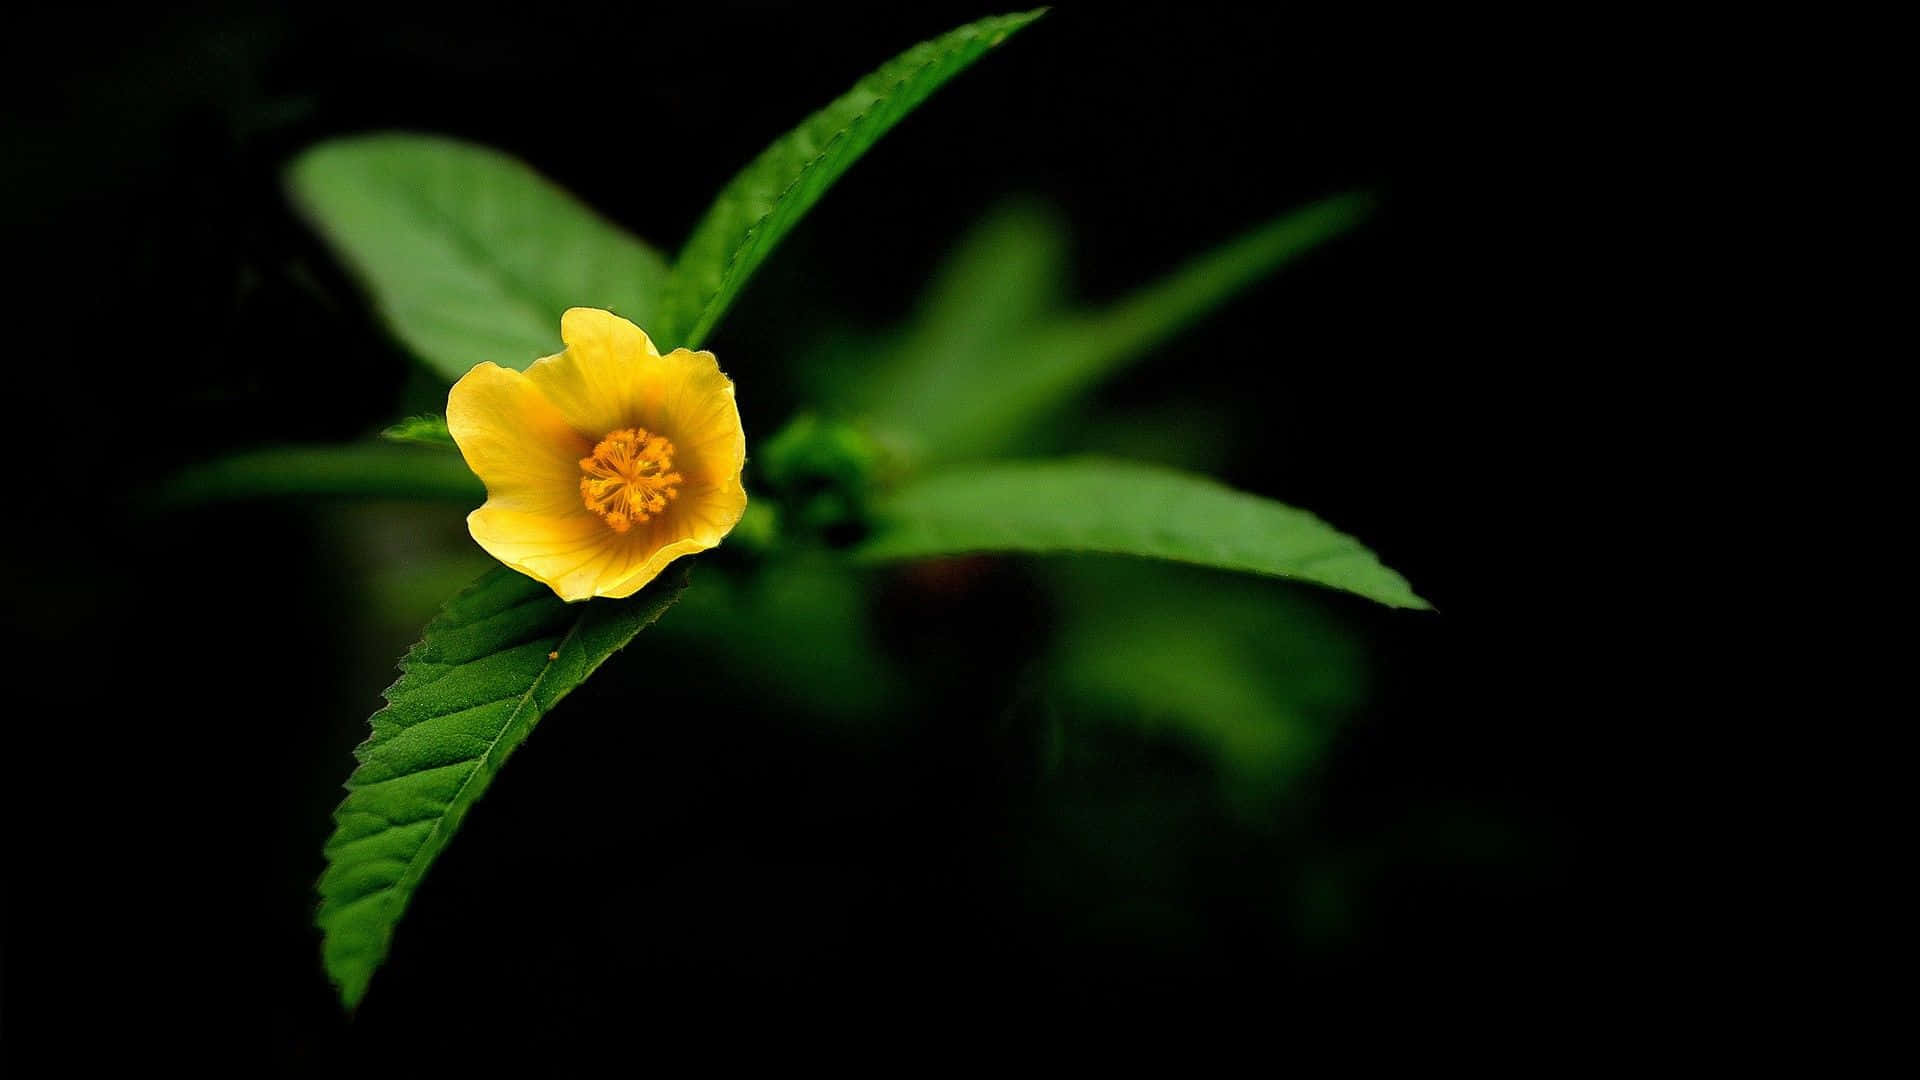 Solitary Yellow Flower Dark Background.jpg Wallpaper